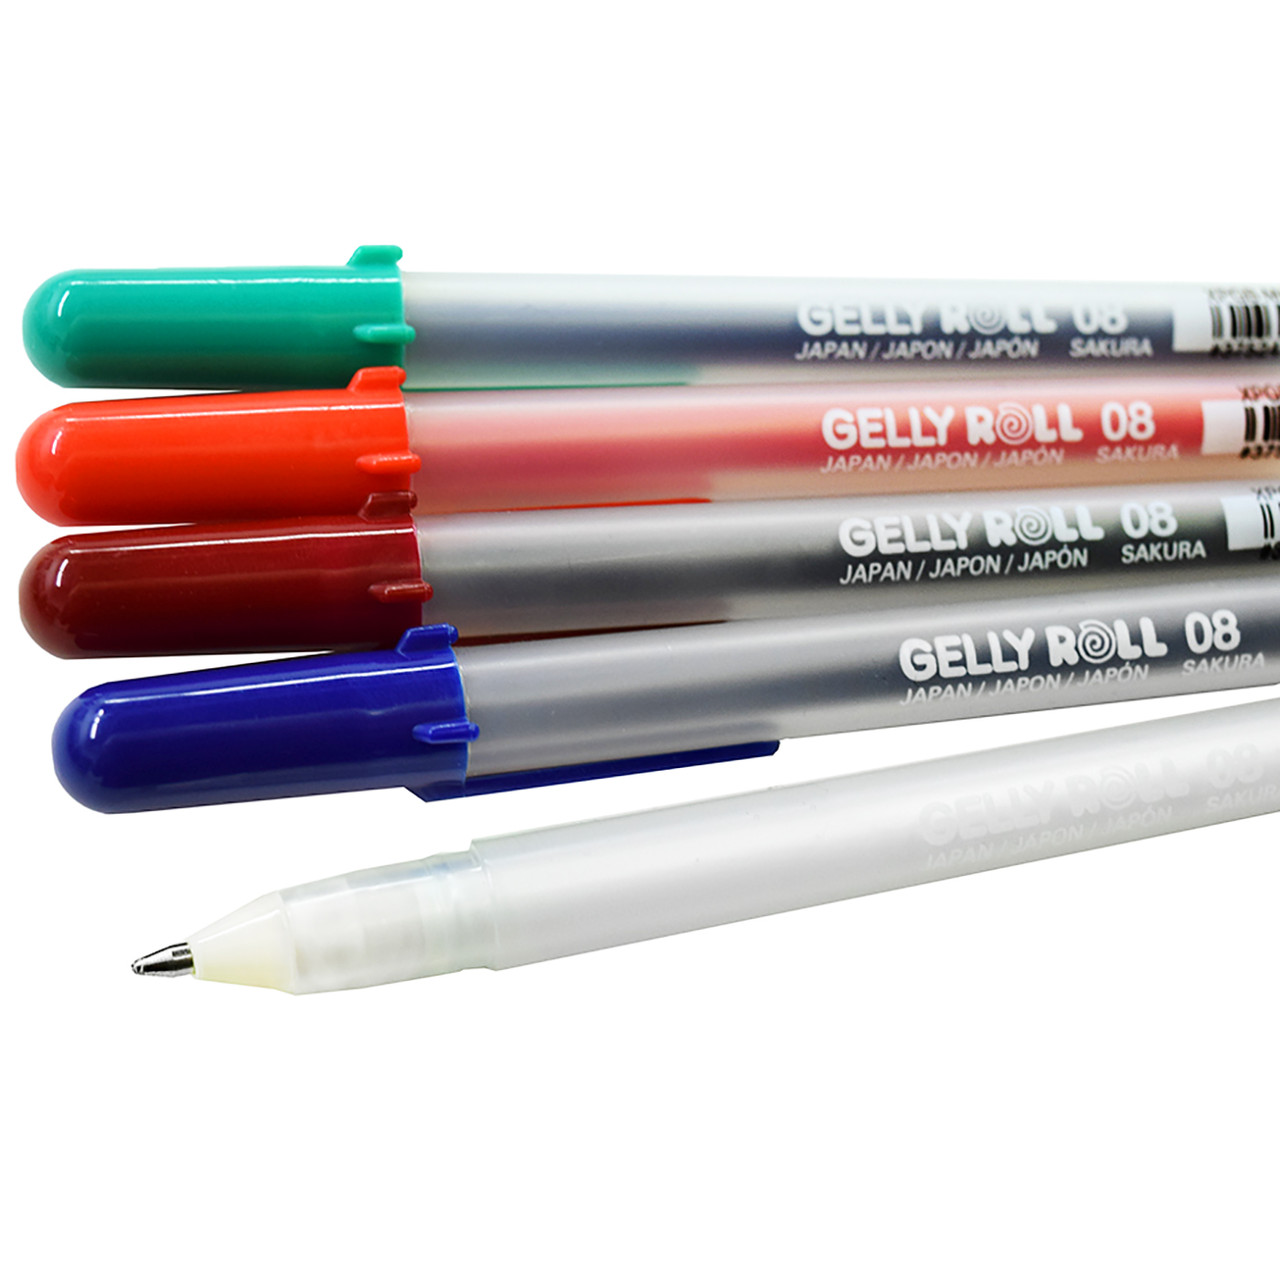 Gelly Roll Retractable Gel Pens